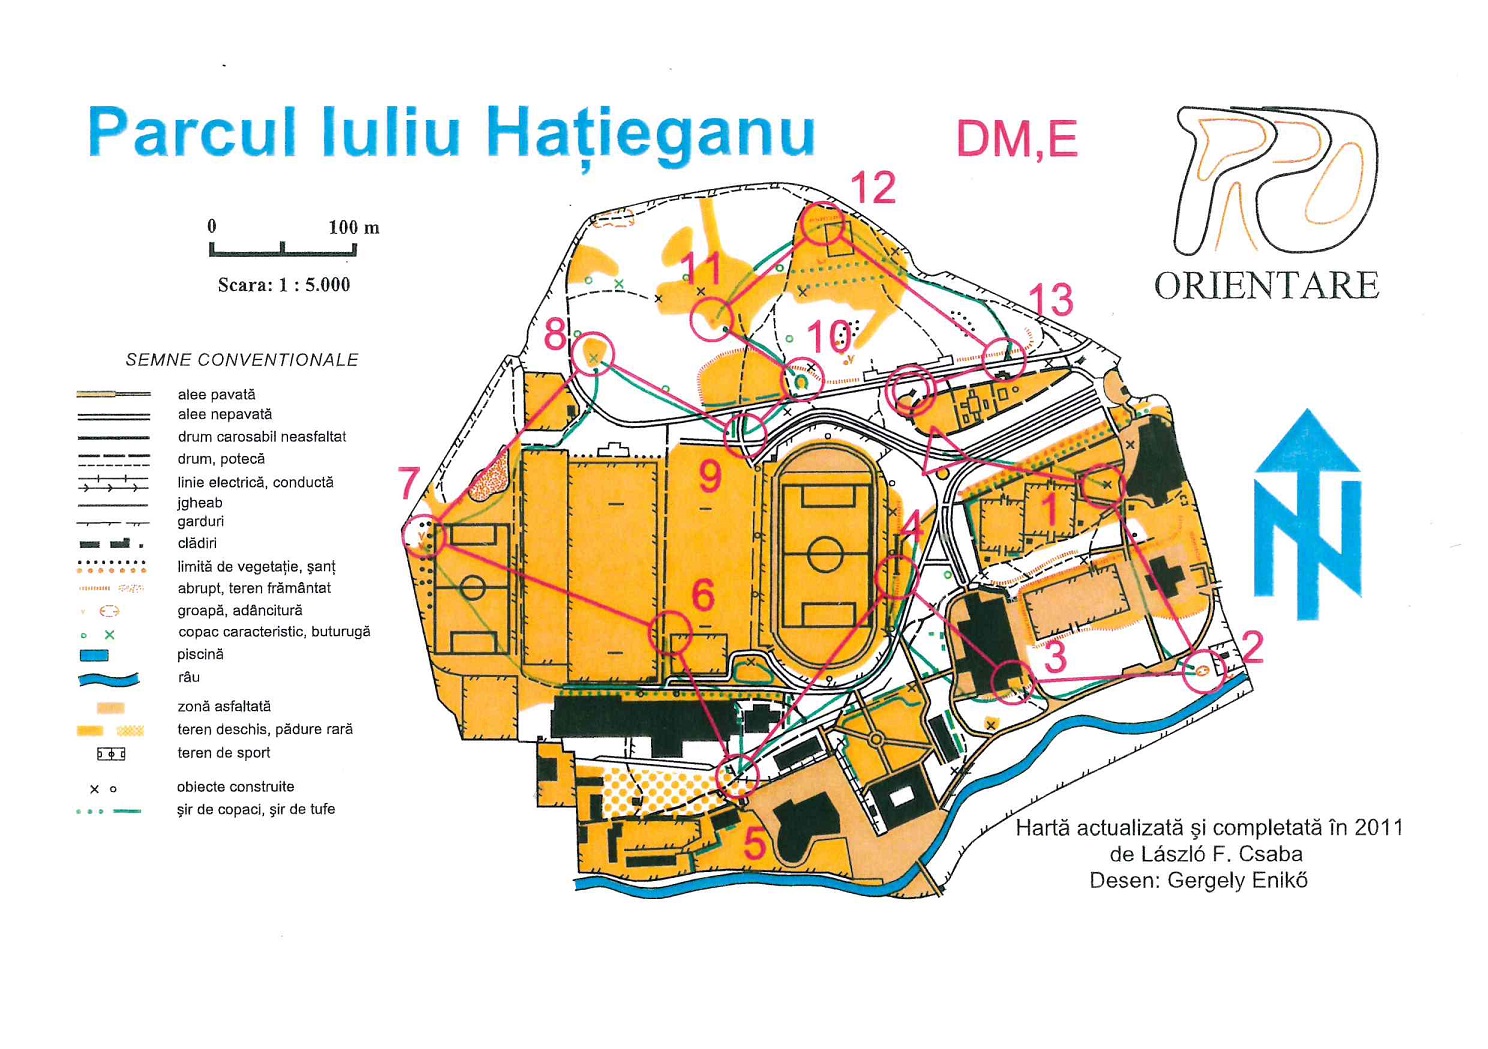 Parcul Iuliu Hatieganu (2011-04-16)